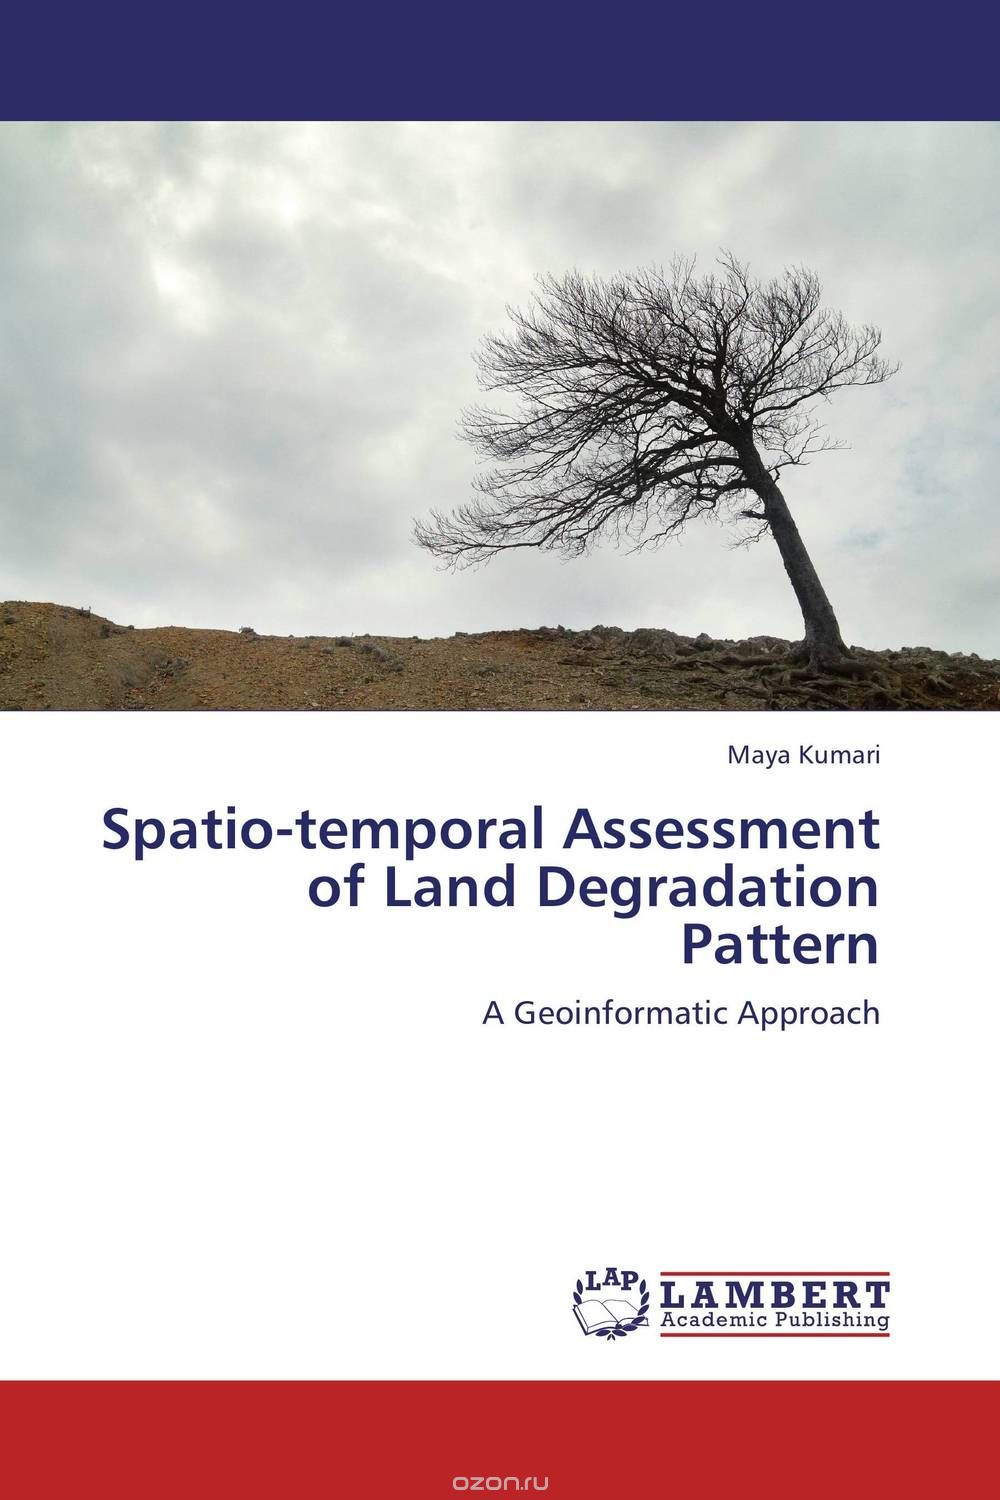 Скачать книгу "Spatio-temporal Assessment of Land Degradation Pattern"